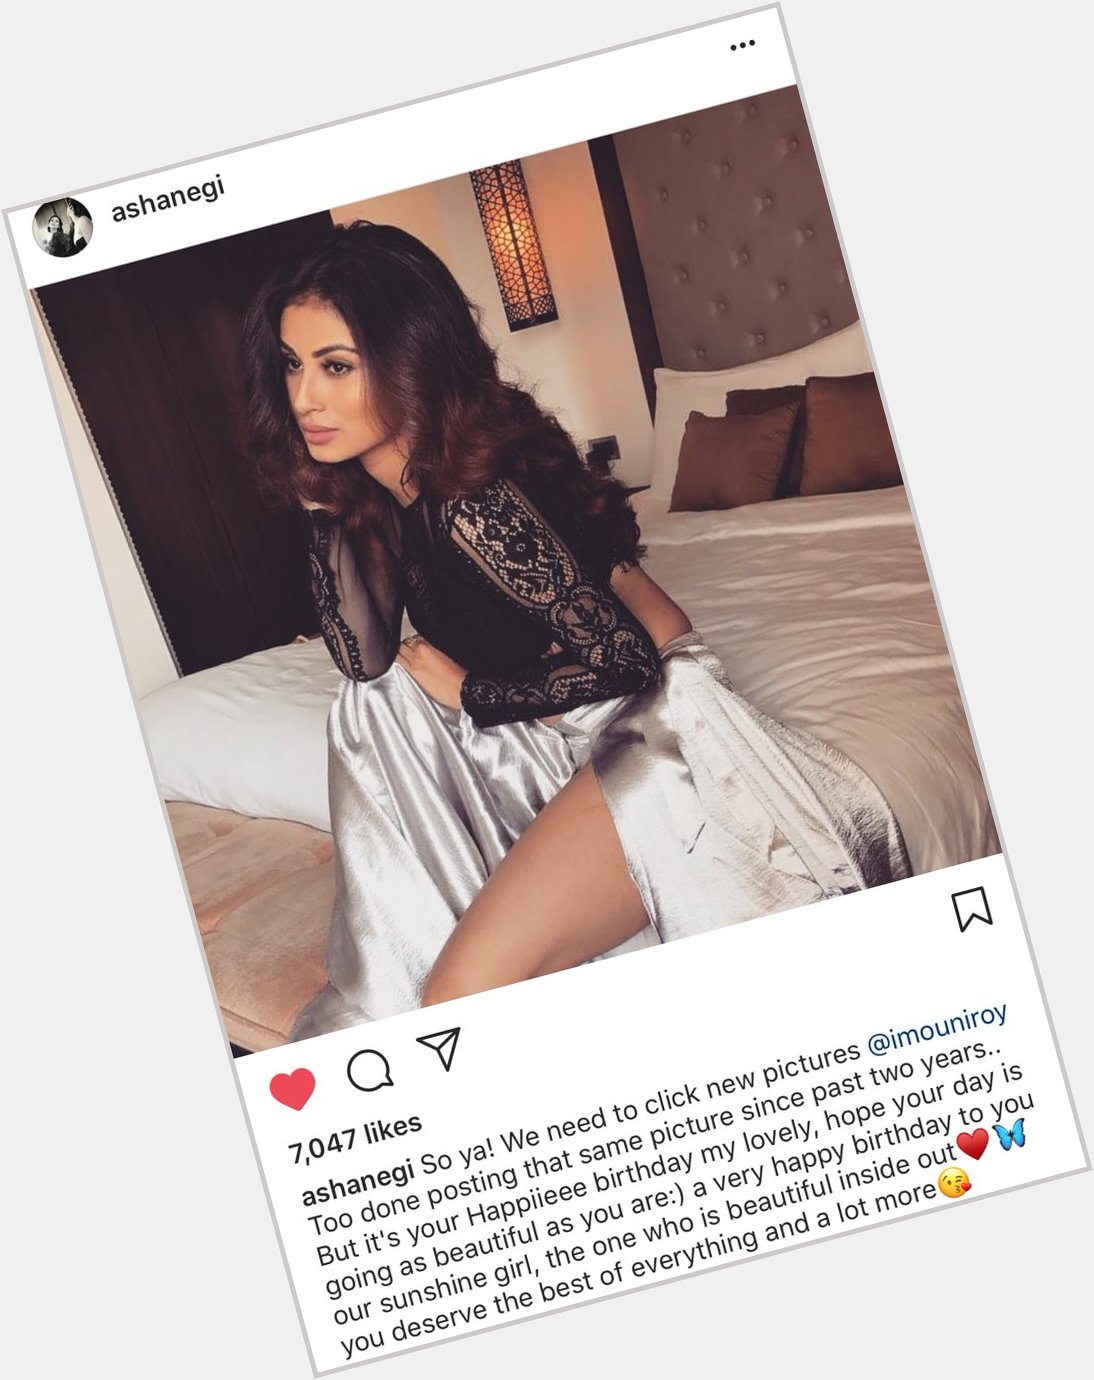  Instagram post wishing Happy Birthday to Mouni Roy. 